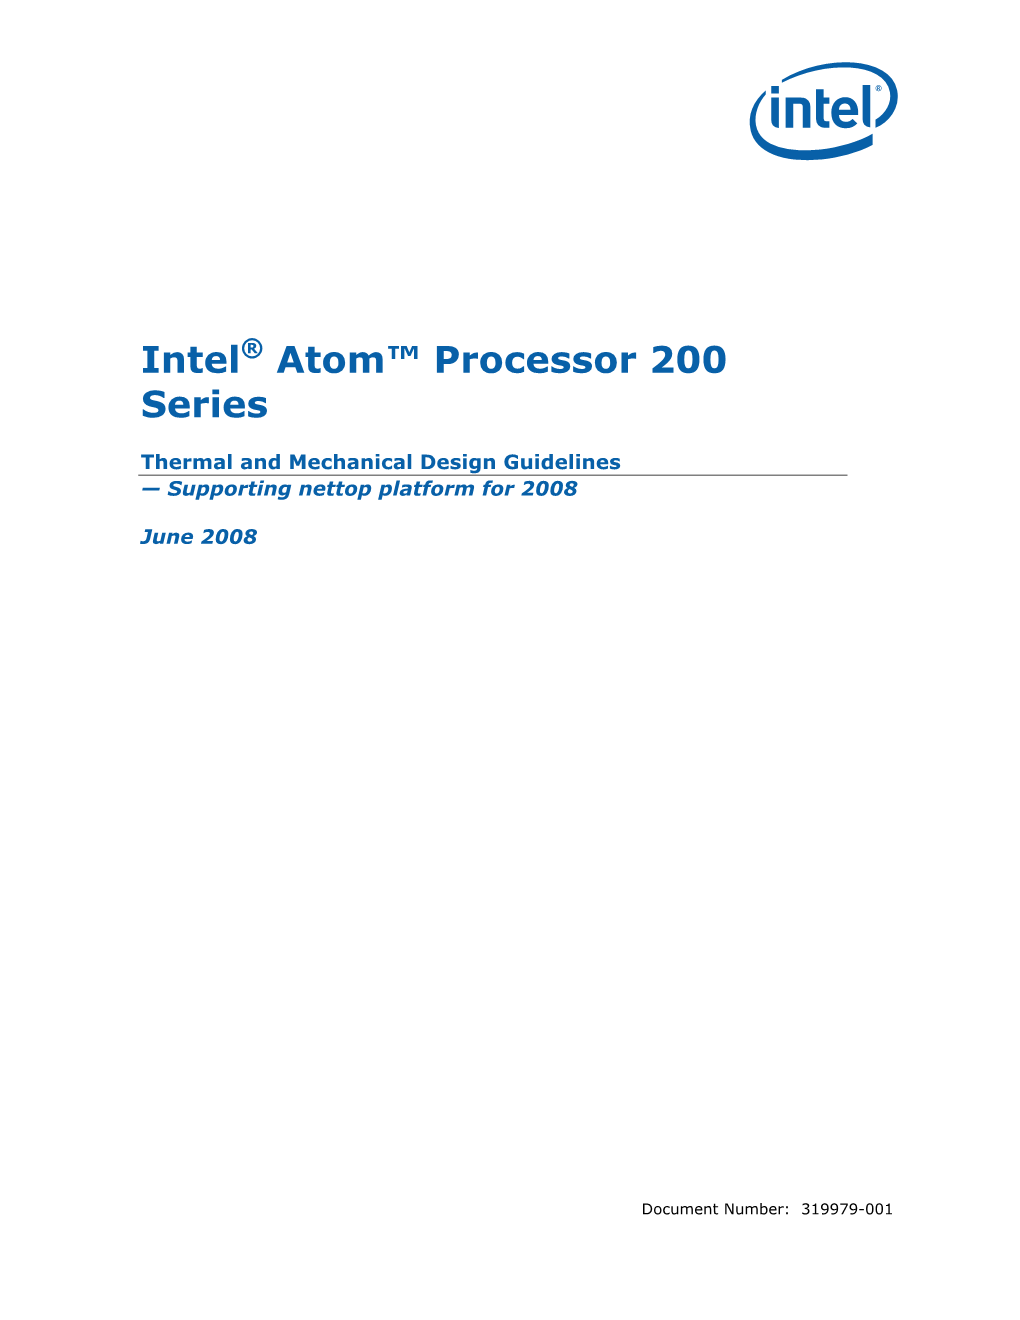 Intel® Atom Processor 200 Series Mechanical, and Thermal Design